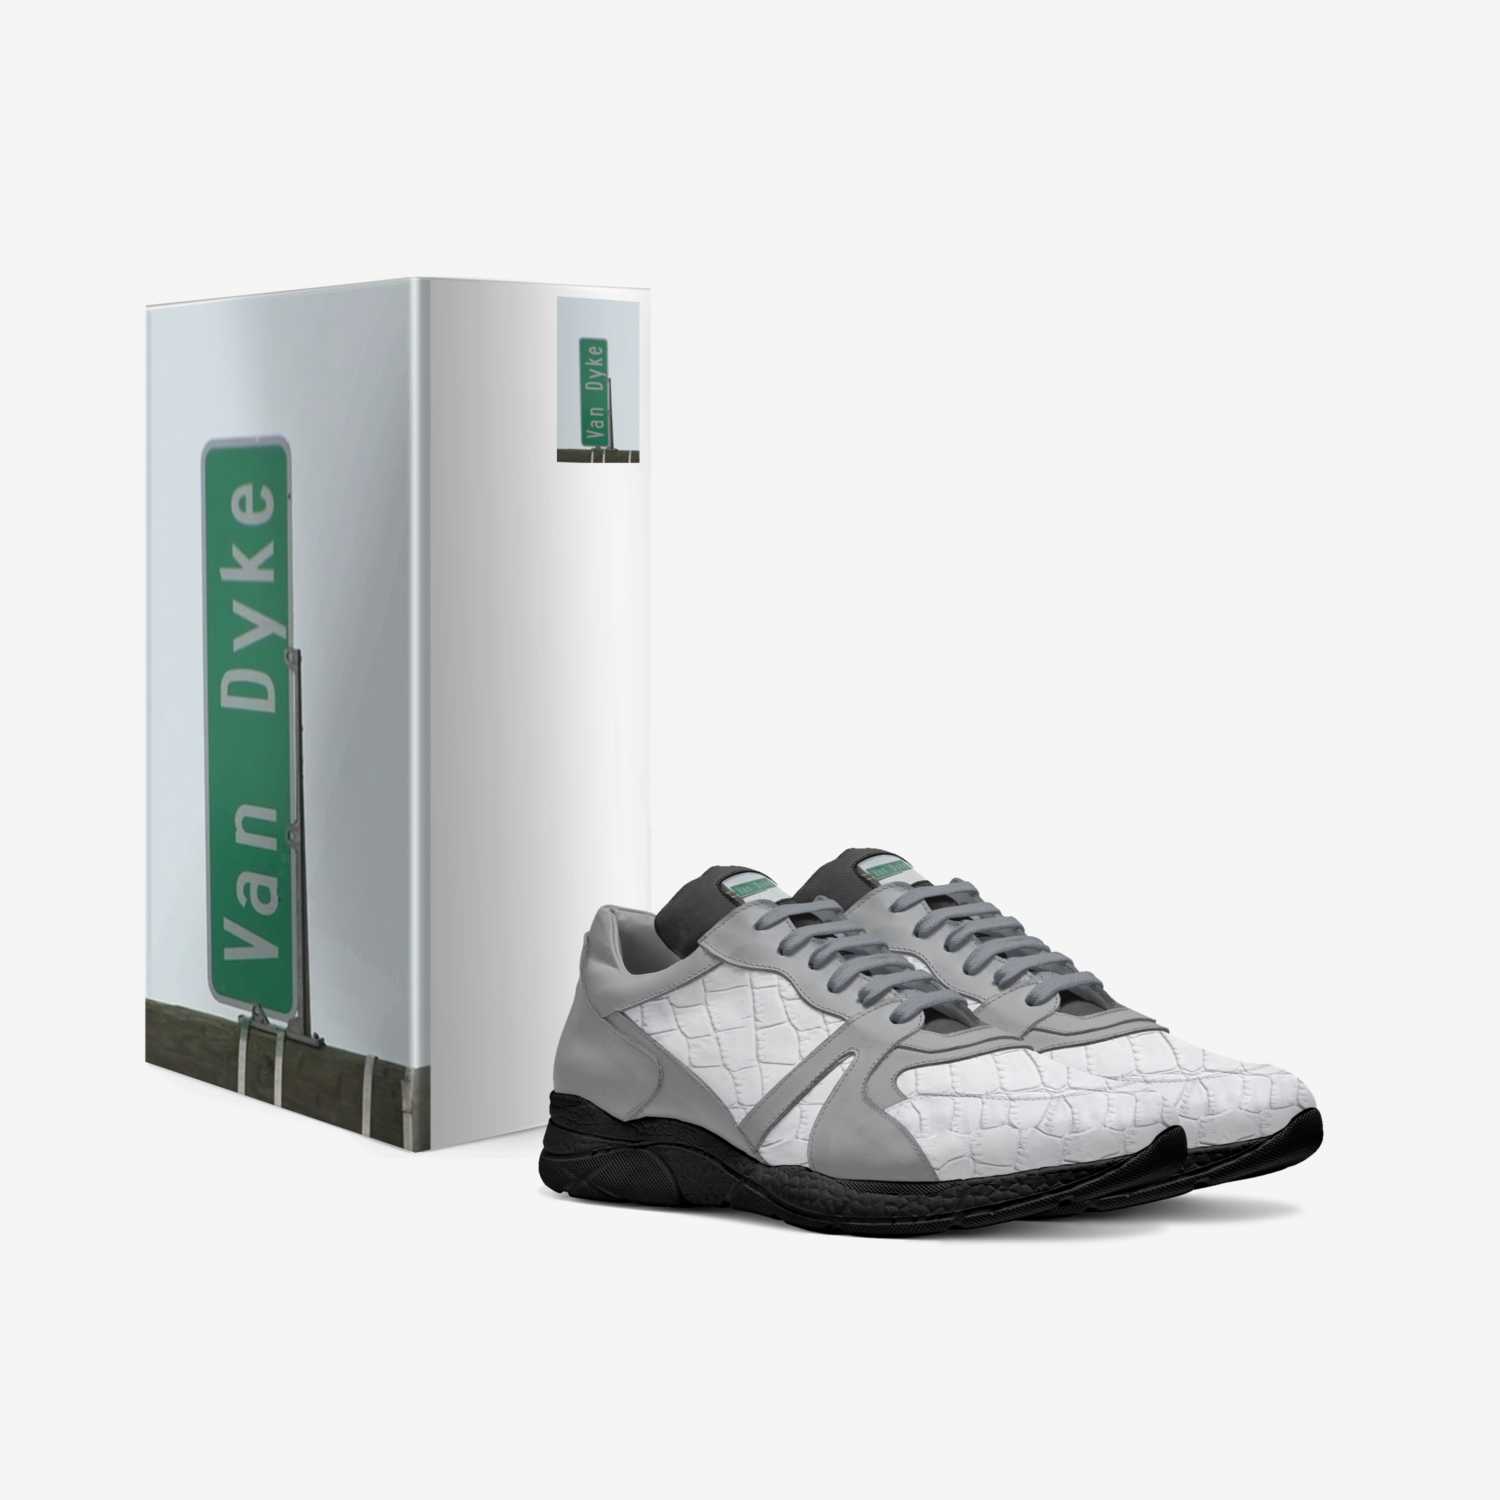 Van Dyke II custom made in Italy shoes by Kelvin Bragg | Box view